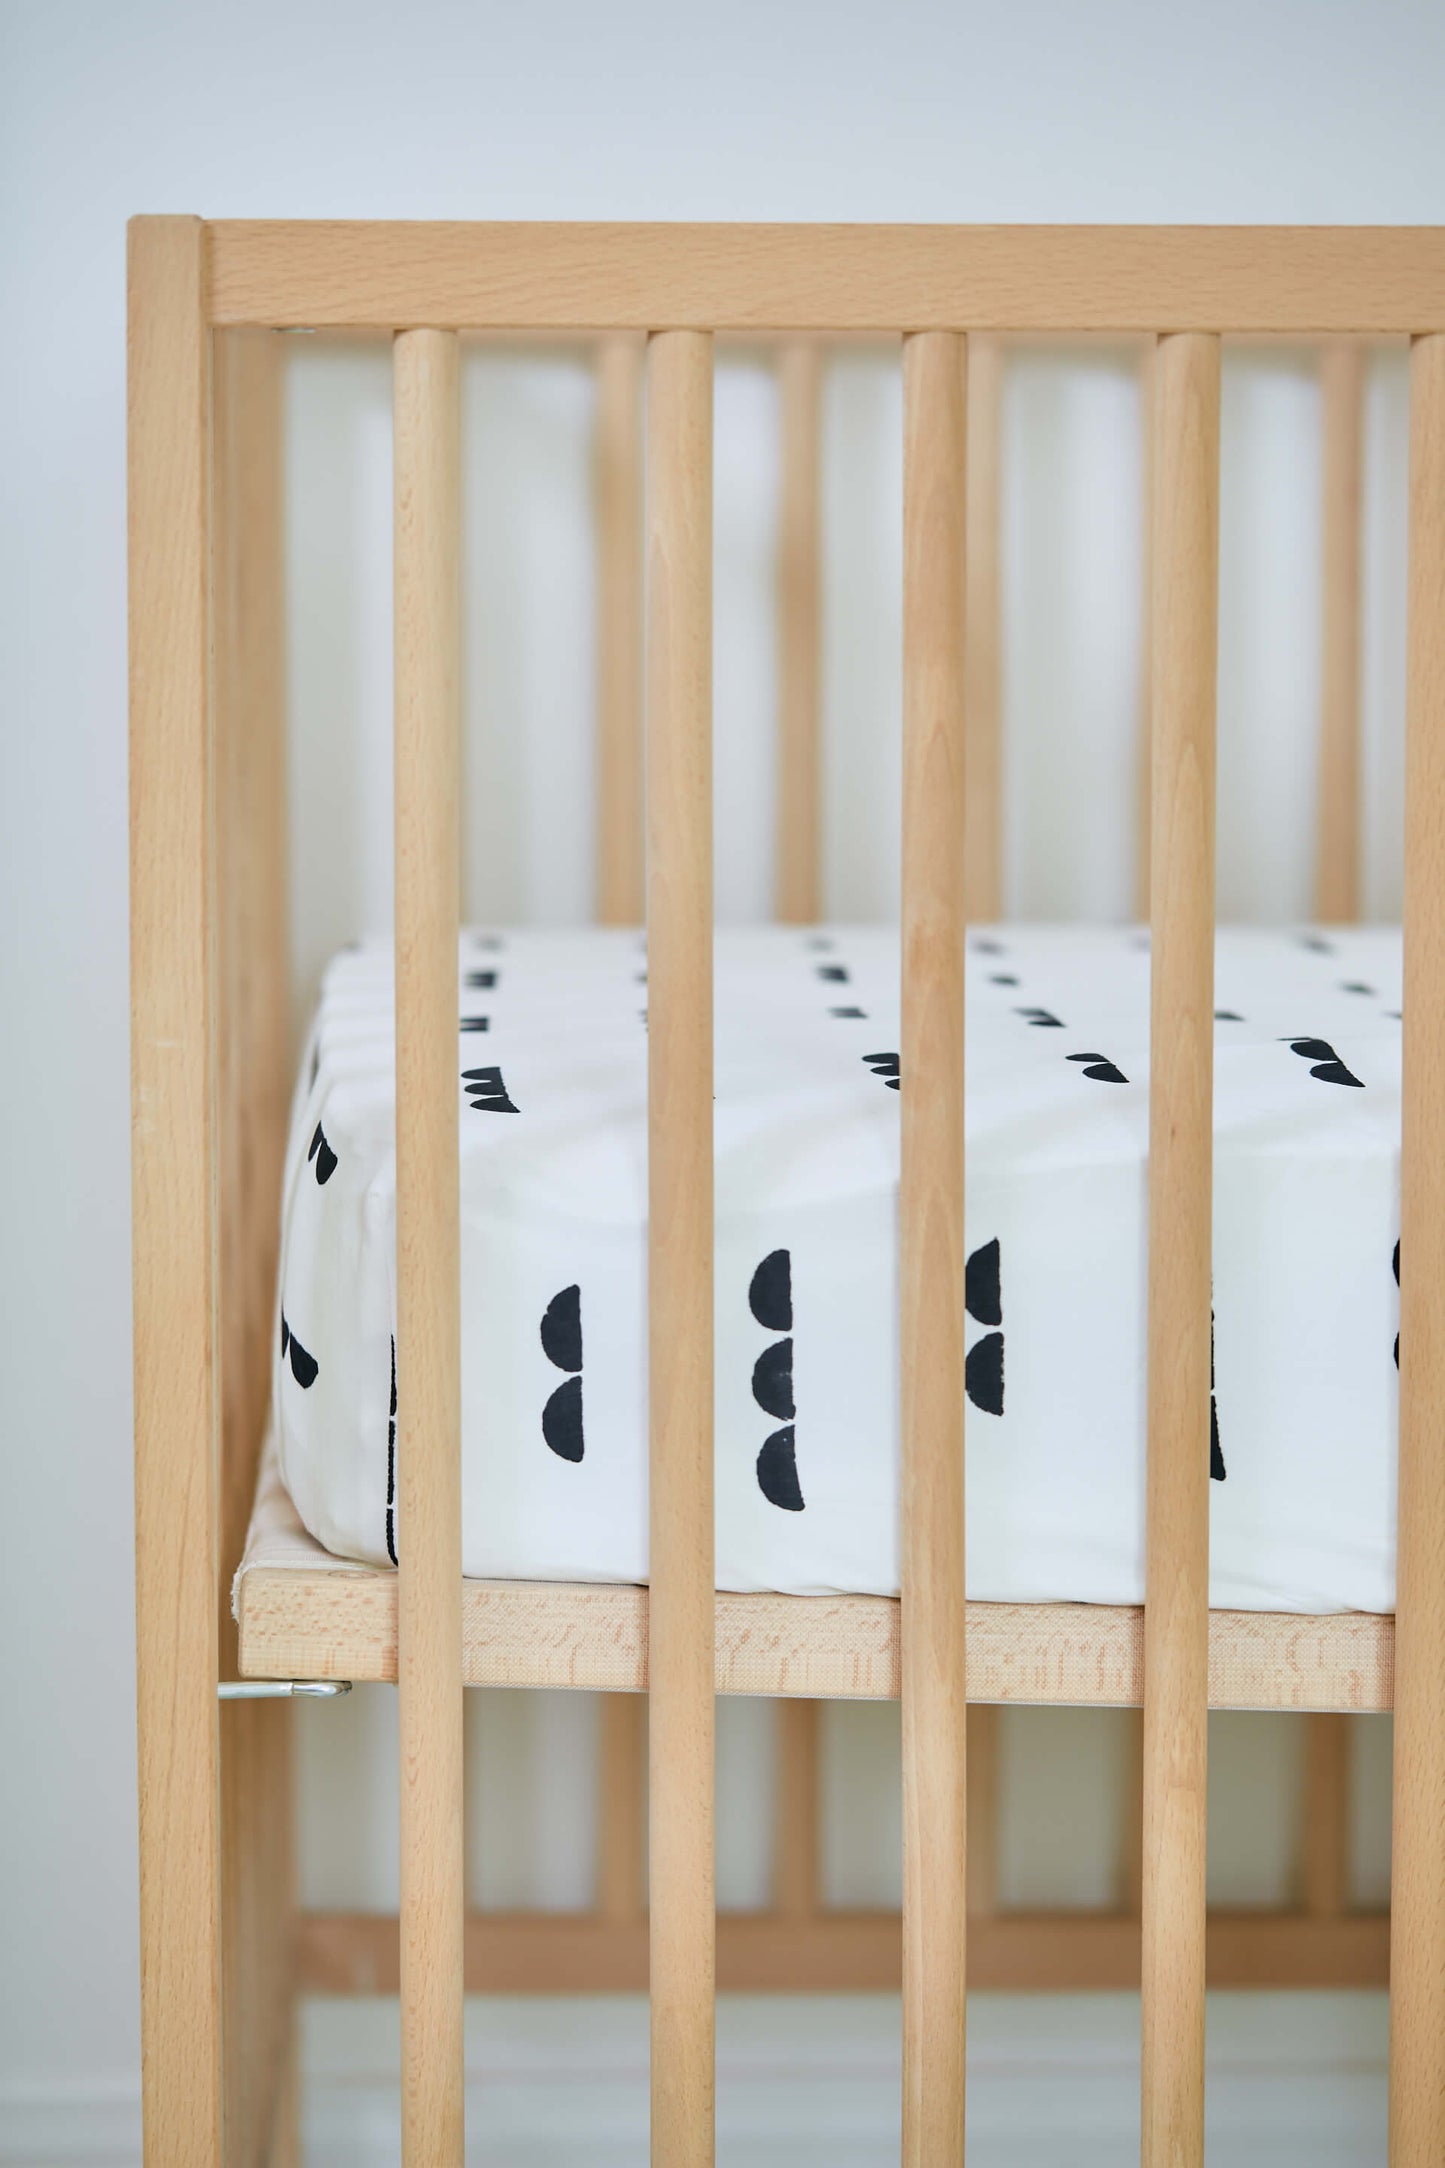 Kindred Kid & Baby Organic Cotton Abacus Crib Sheet
Jungle Pillows